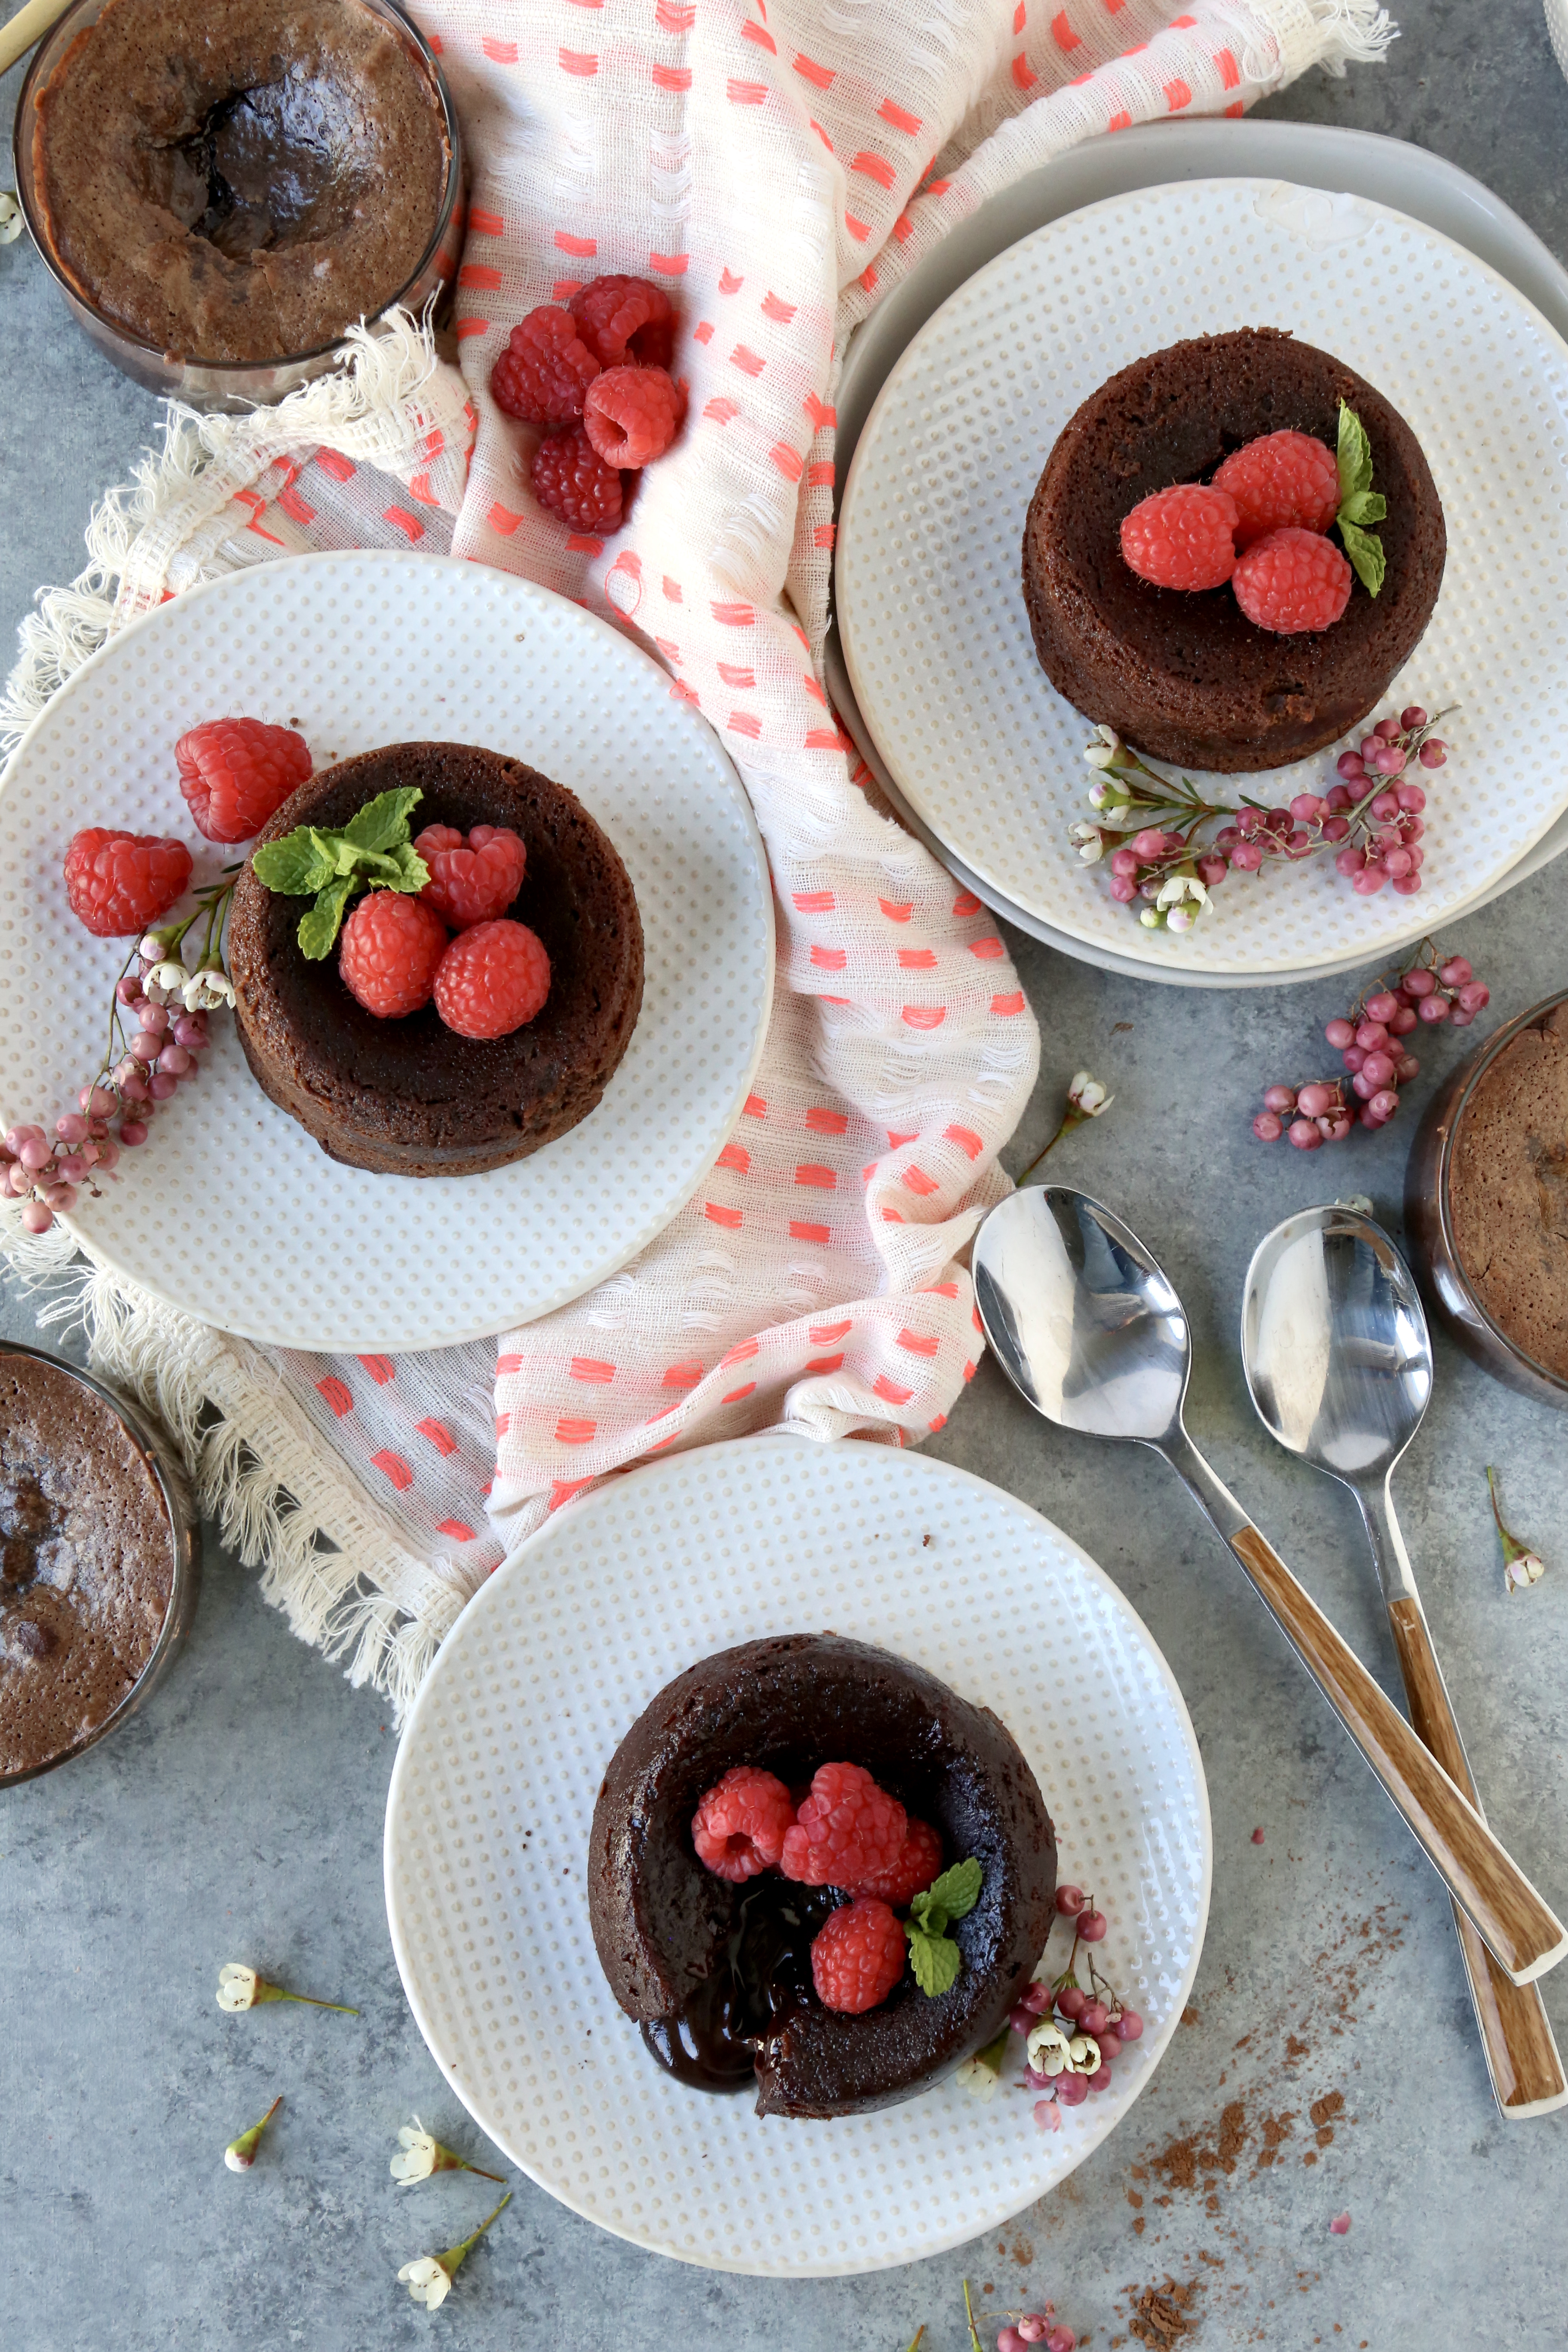 Flourless Molten Chocolate Cake by Kristen Massad